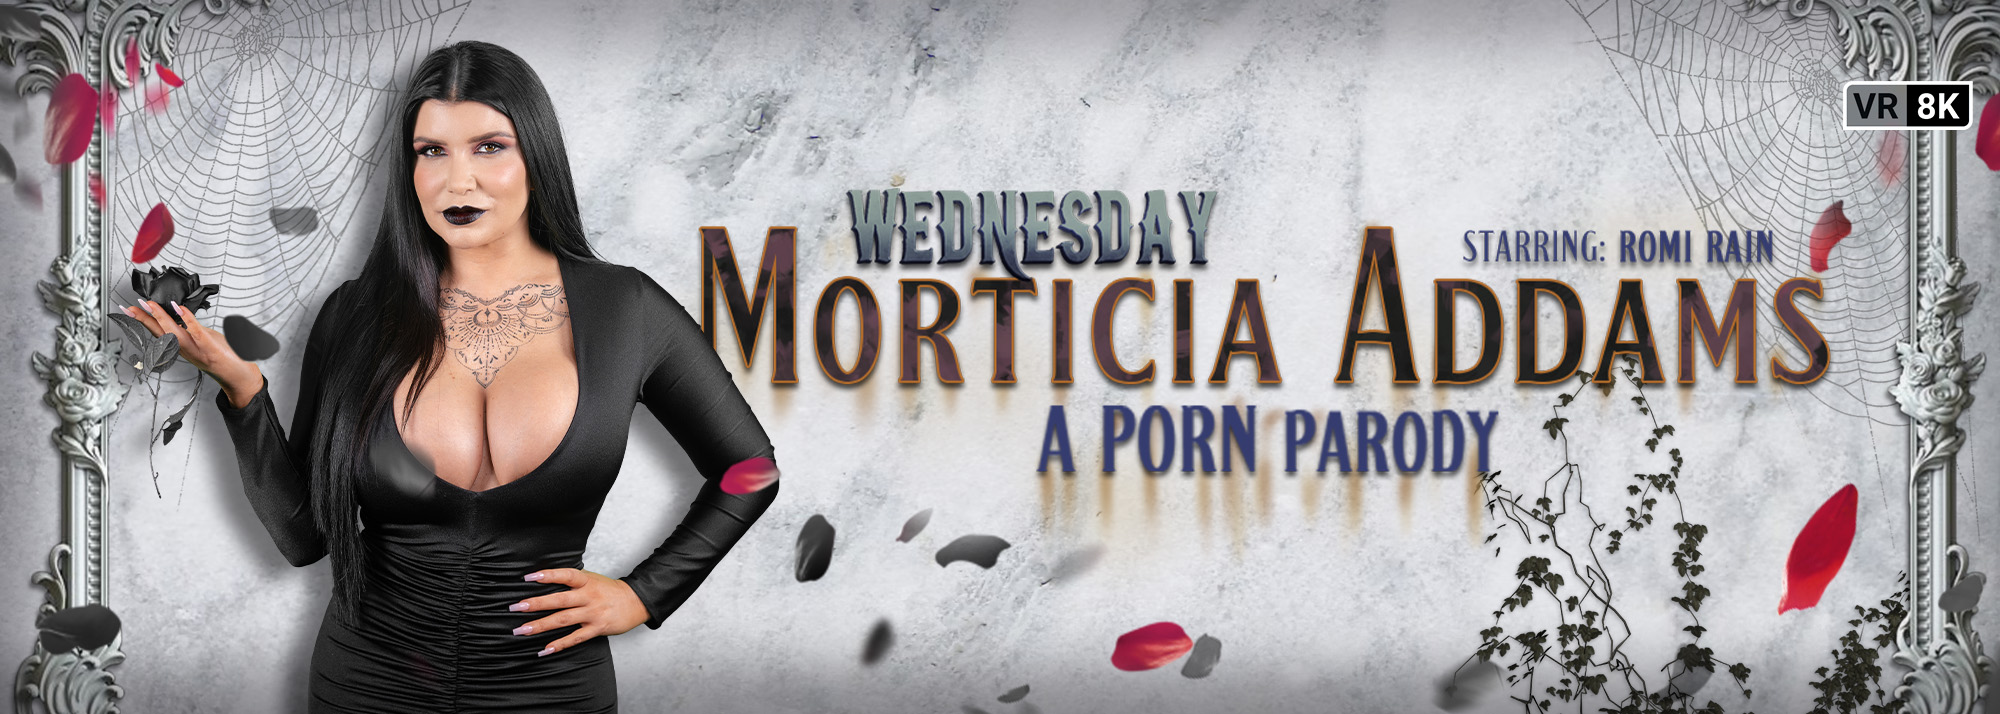 Wednesday: Morticia Addams (A Porn Parody) - VR Video, Starring: Romi Rain